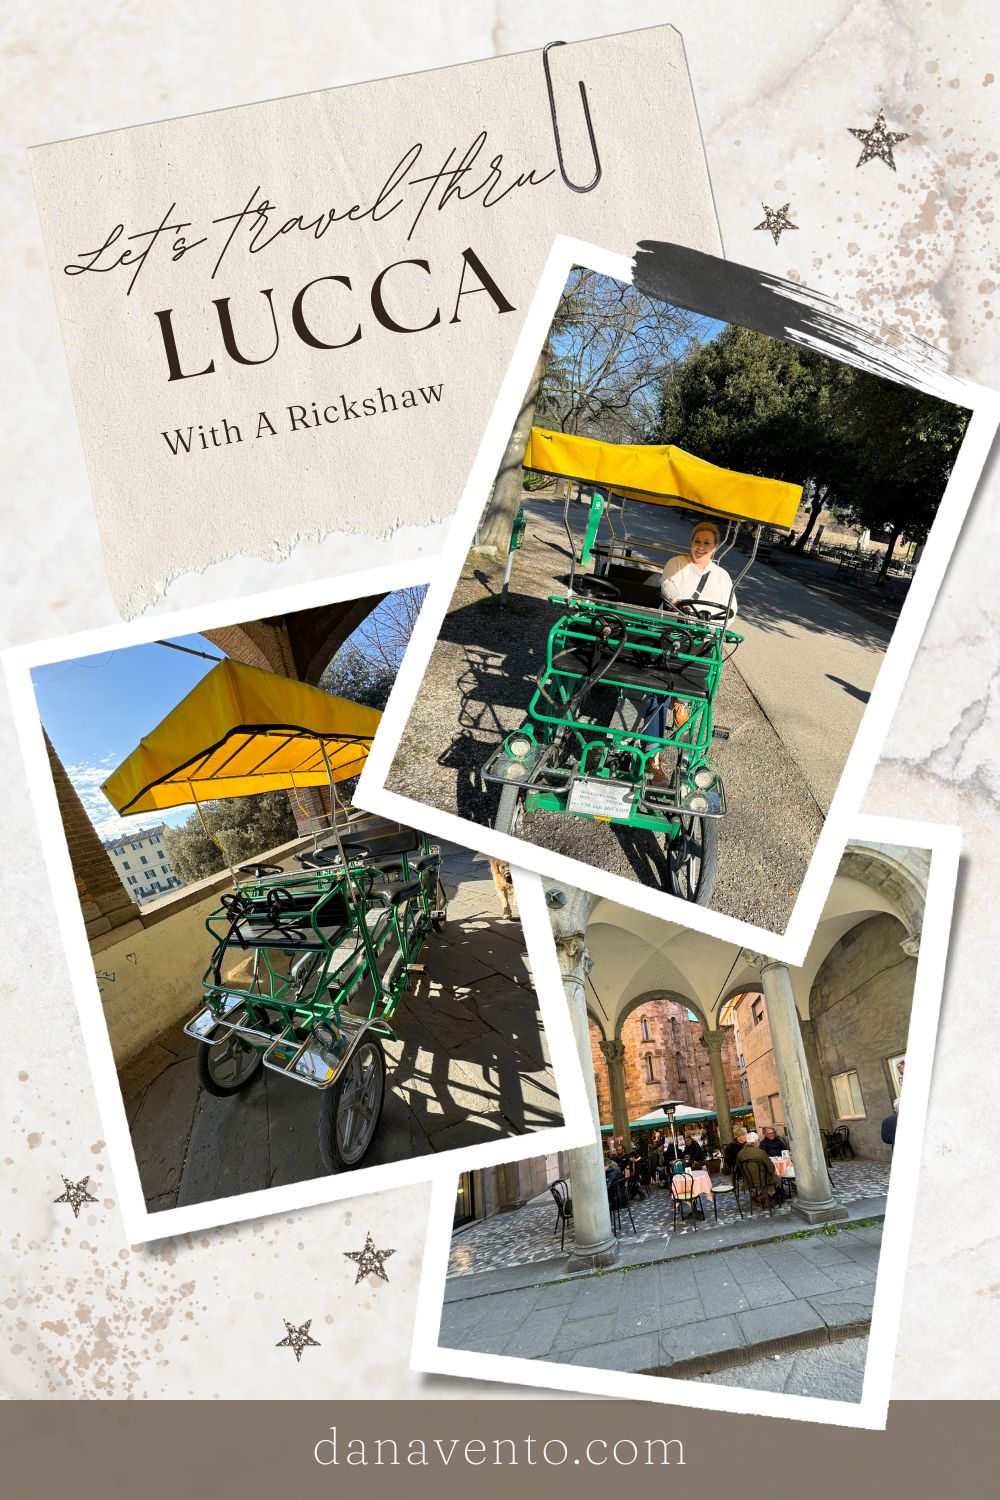 dana behind the wheel of the best Lucca bike rental rickshaw for four